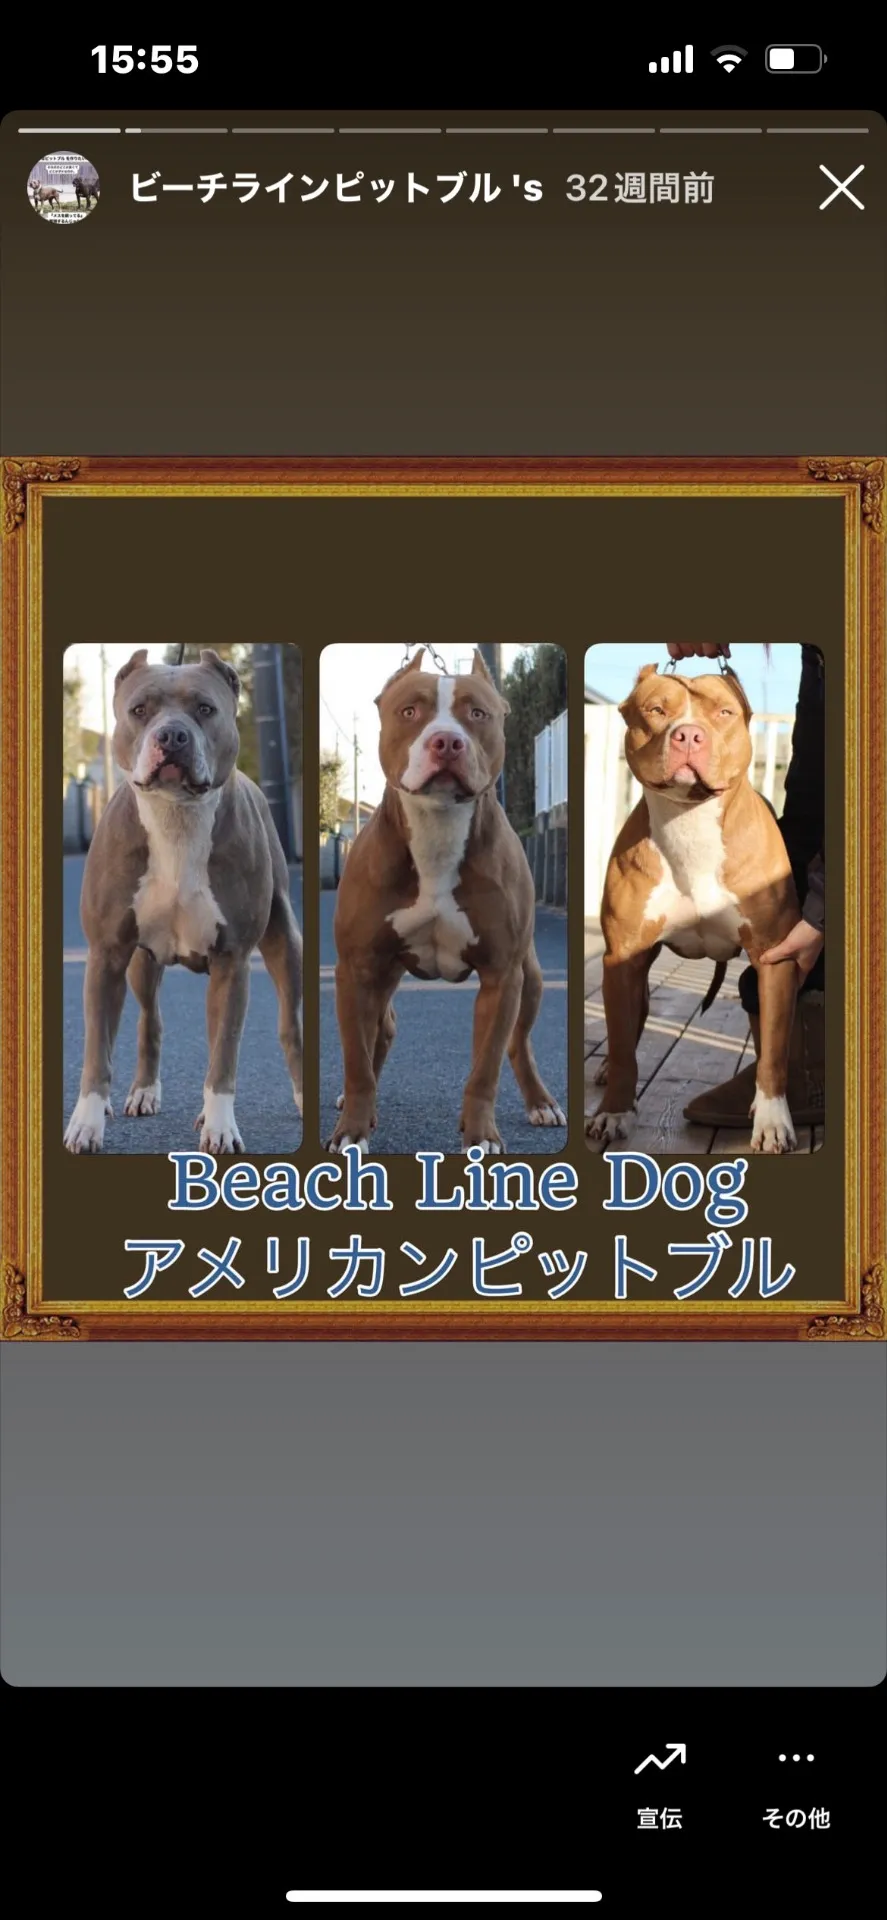 Beach Line Dog